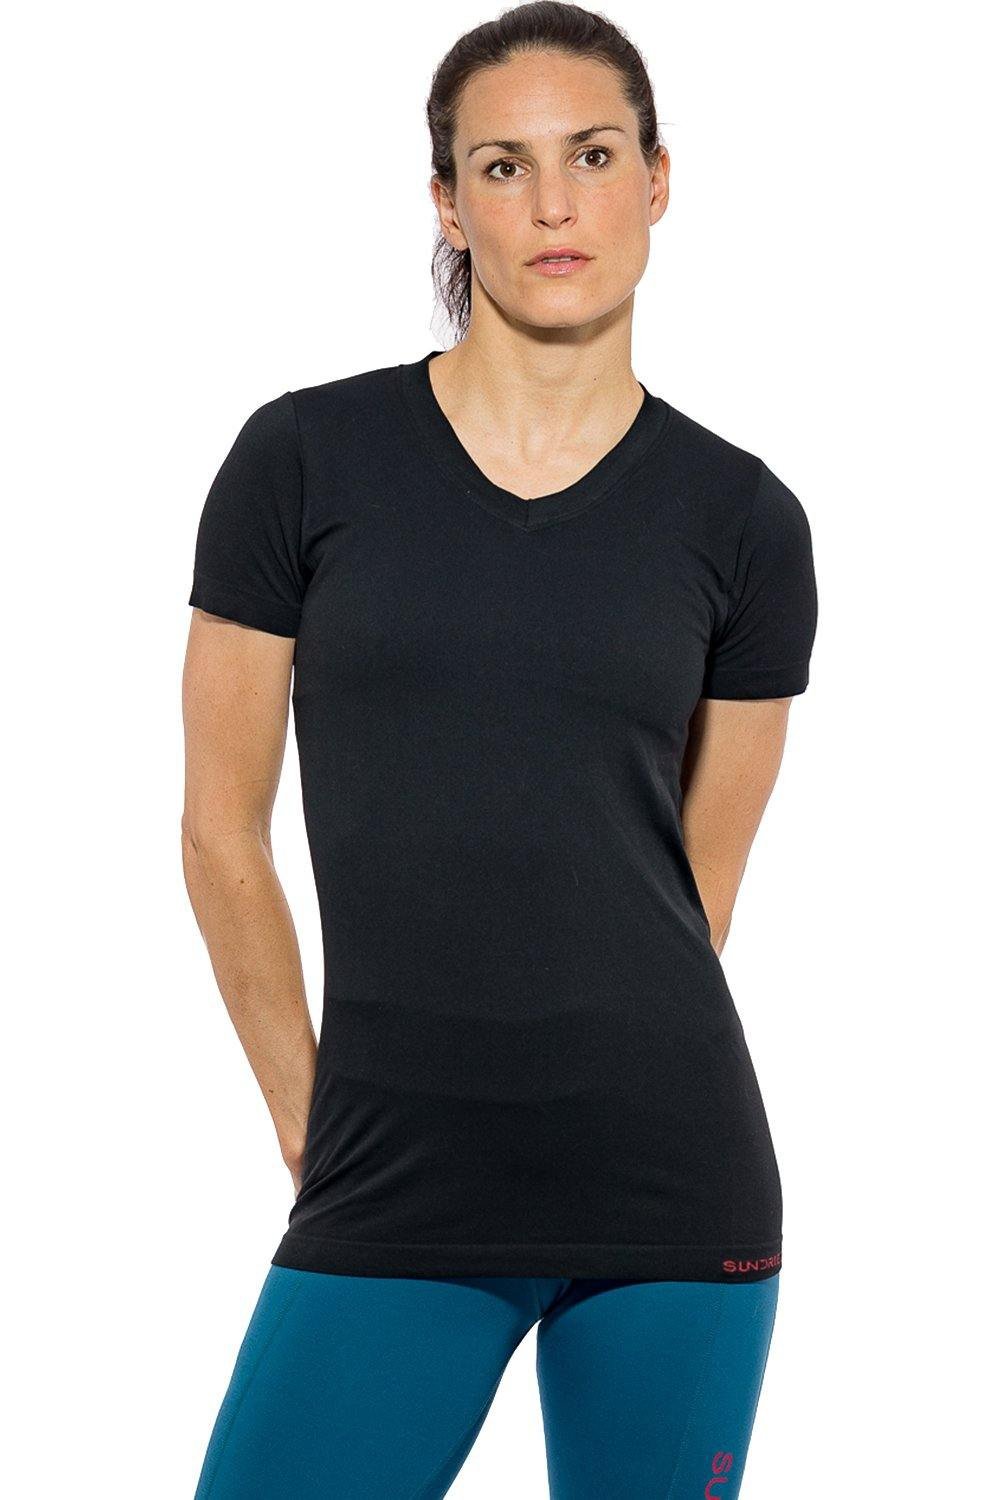 Sundried Eco Tech Women's Fitness Top T-Shirt Activewear